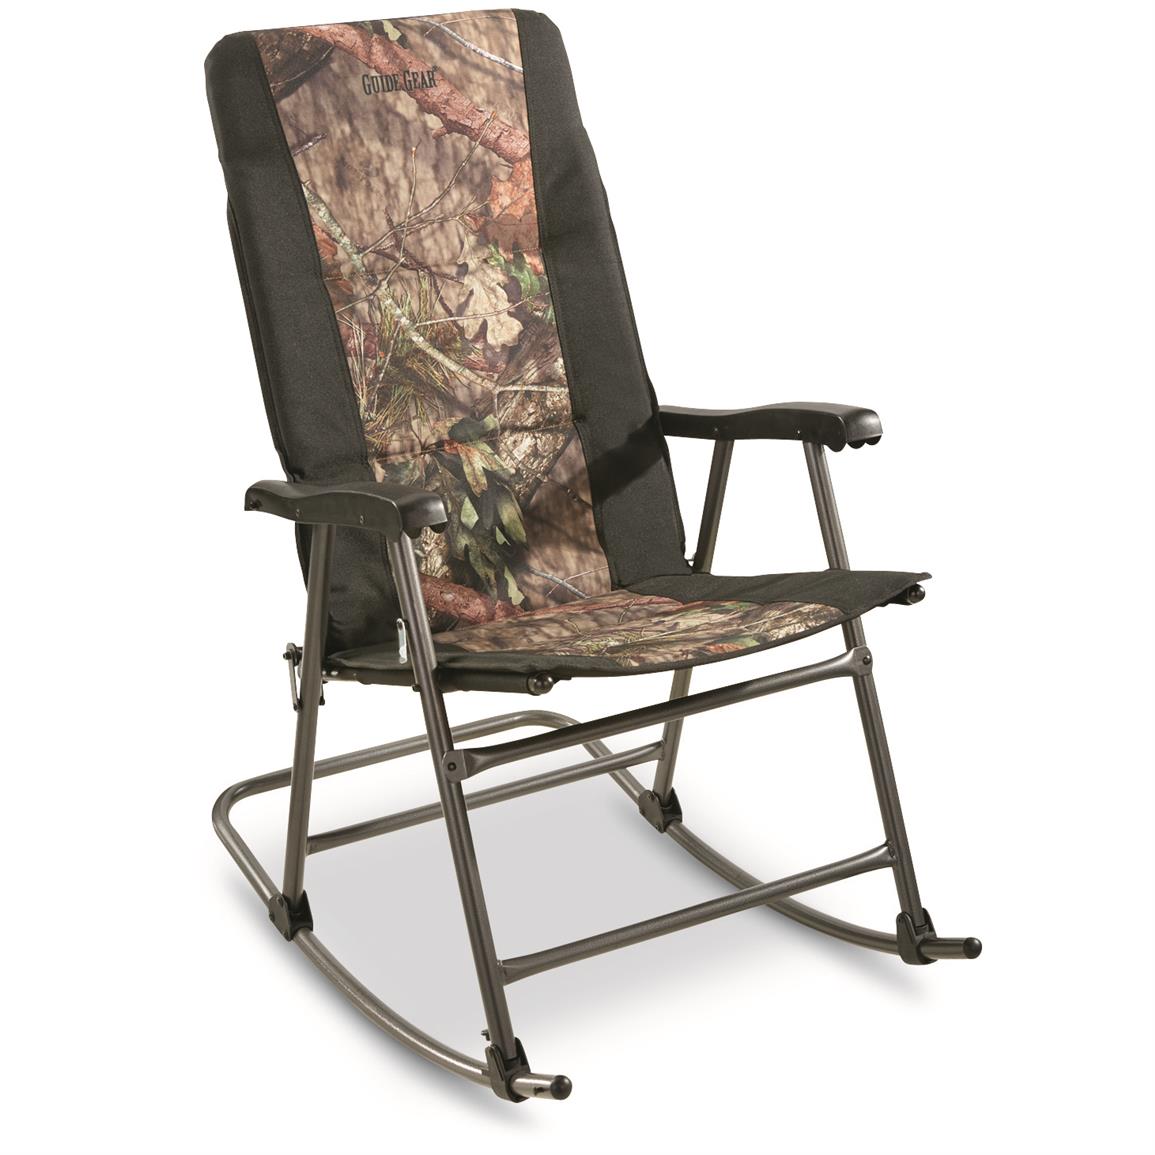 Guide Gear Oversized Camping Mossy Oak Camo Rocking Chair